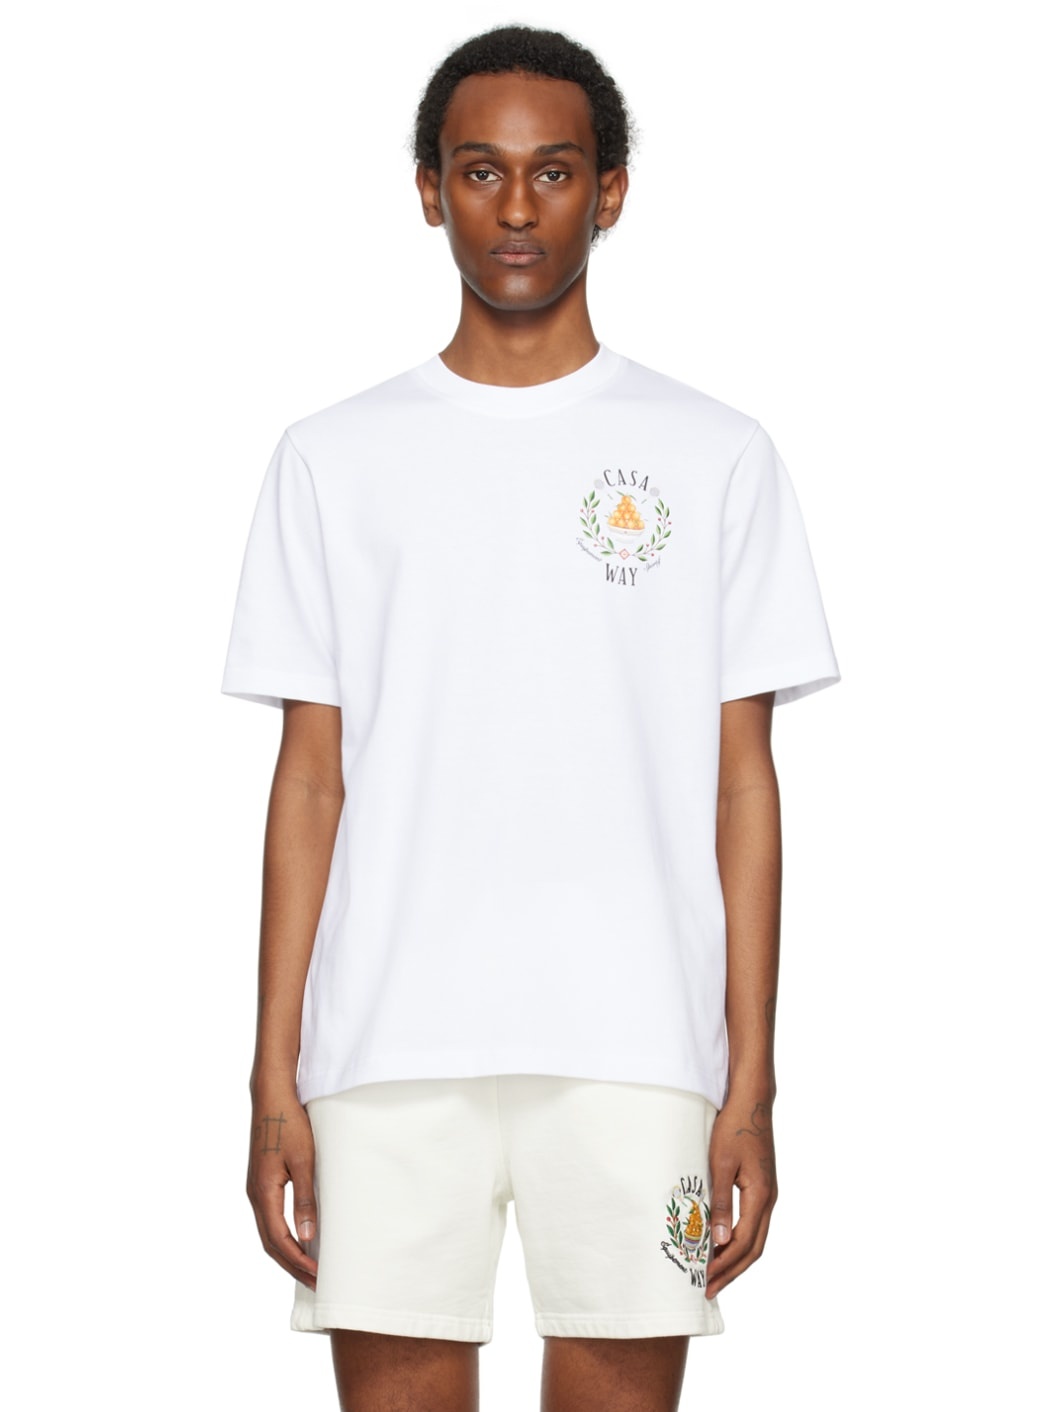 White 'Casa Way' T-Shirt - 1